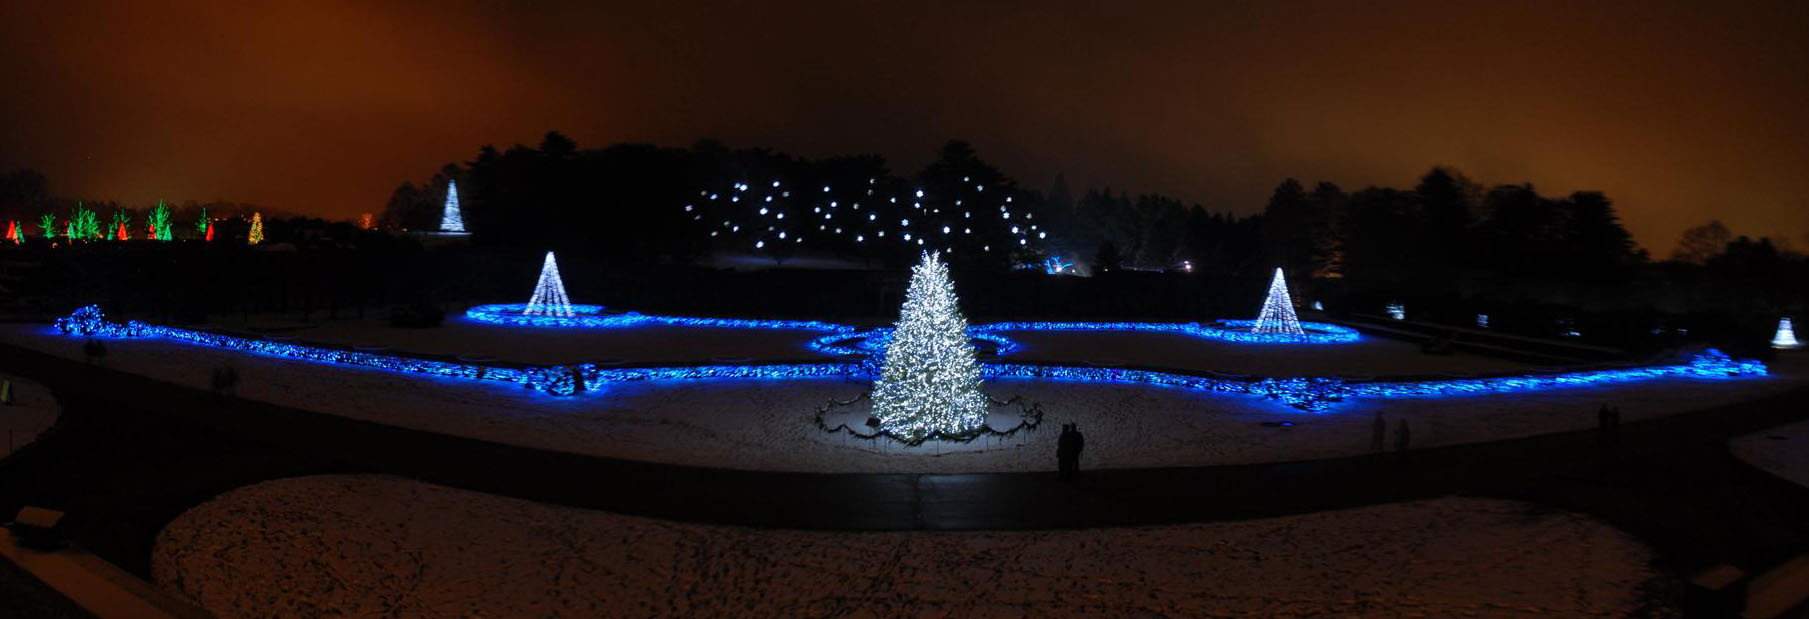 Christmas tree, lights, nighttime, ornament, panoramic, path, snow, trees, walkway